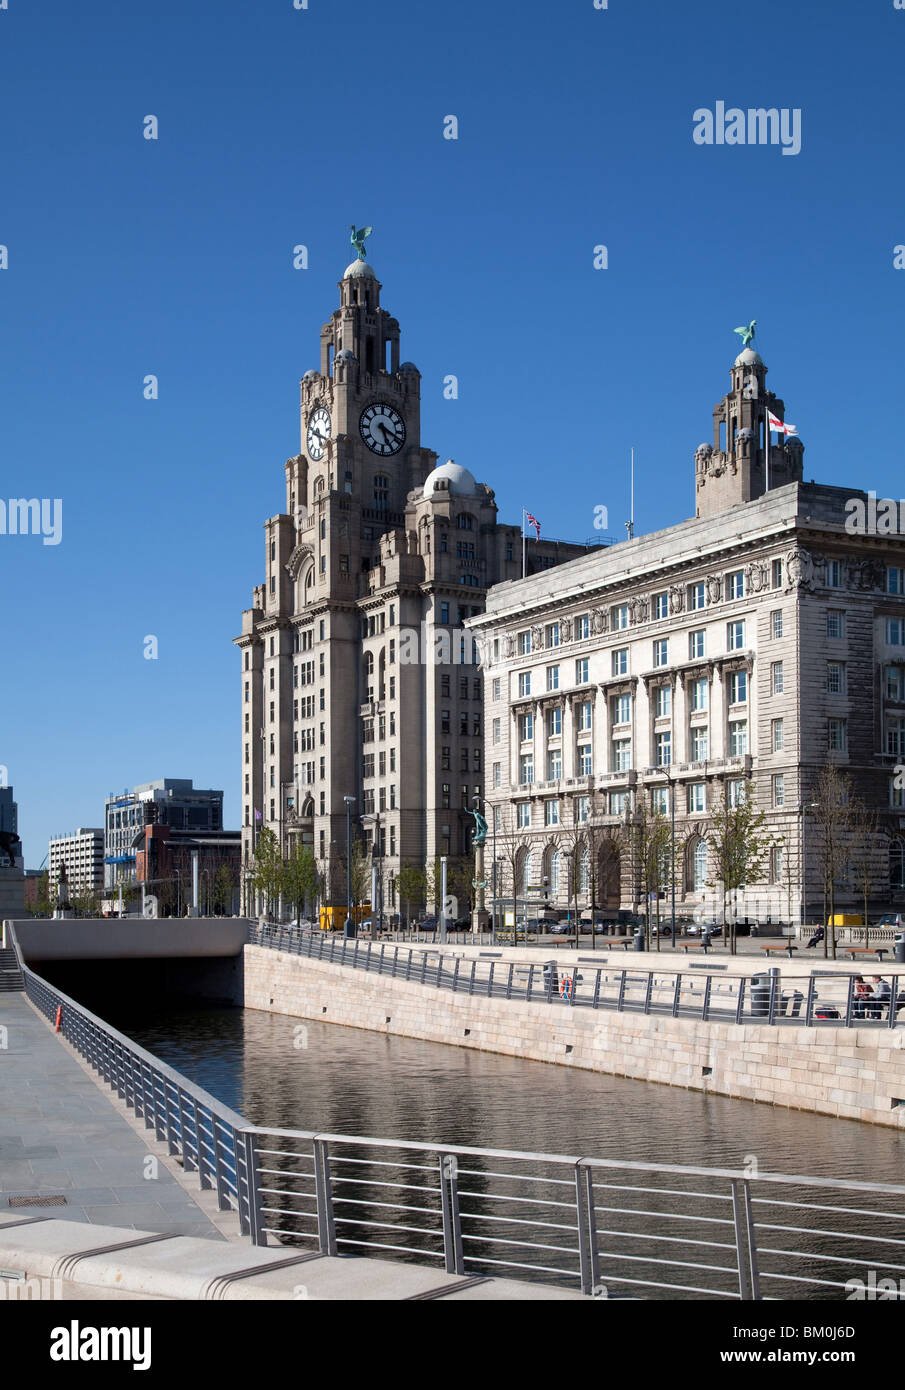 Royal Liver Building e Cunard Building con nuovo Leeds Liverpool canal estensione in primo piano, Liverpool, in Inghilterra Foto Stock